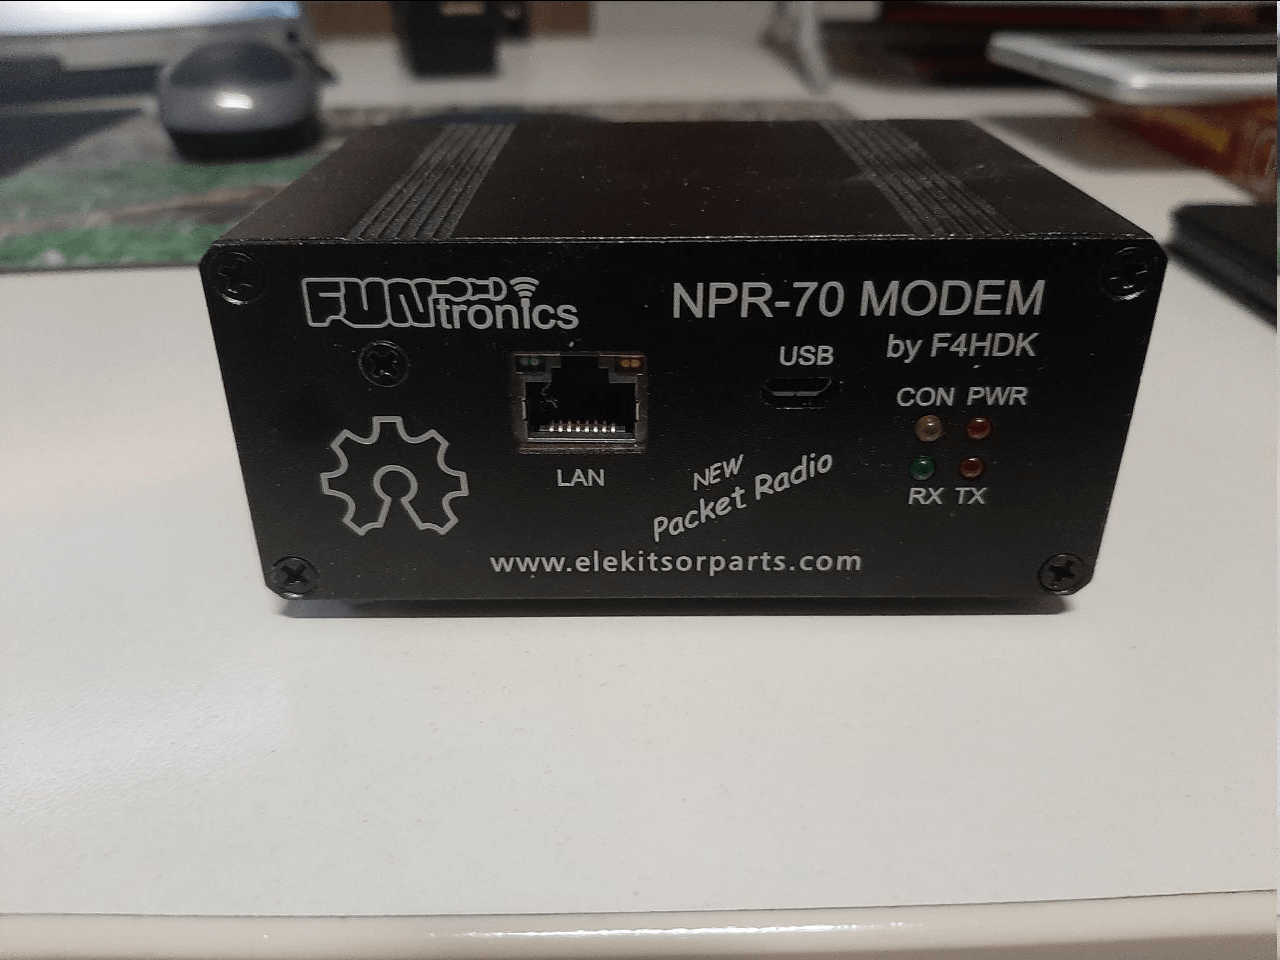 NPR-70 modem